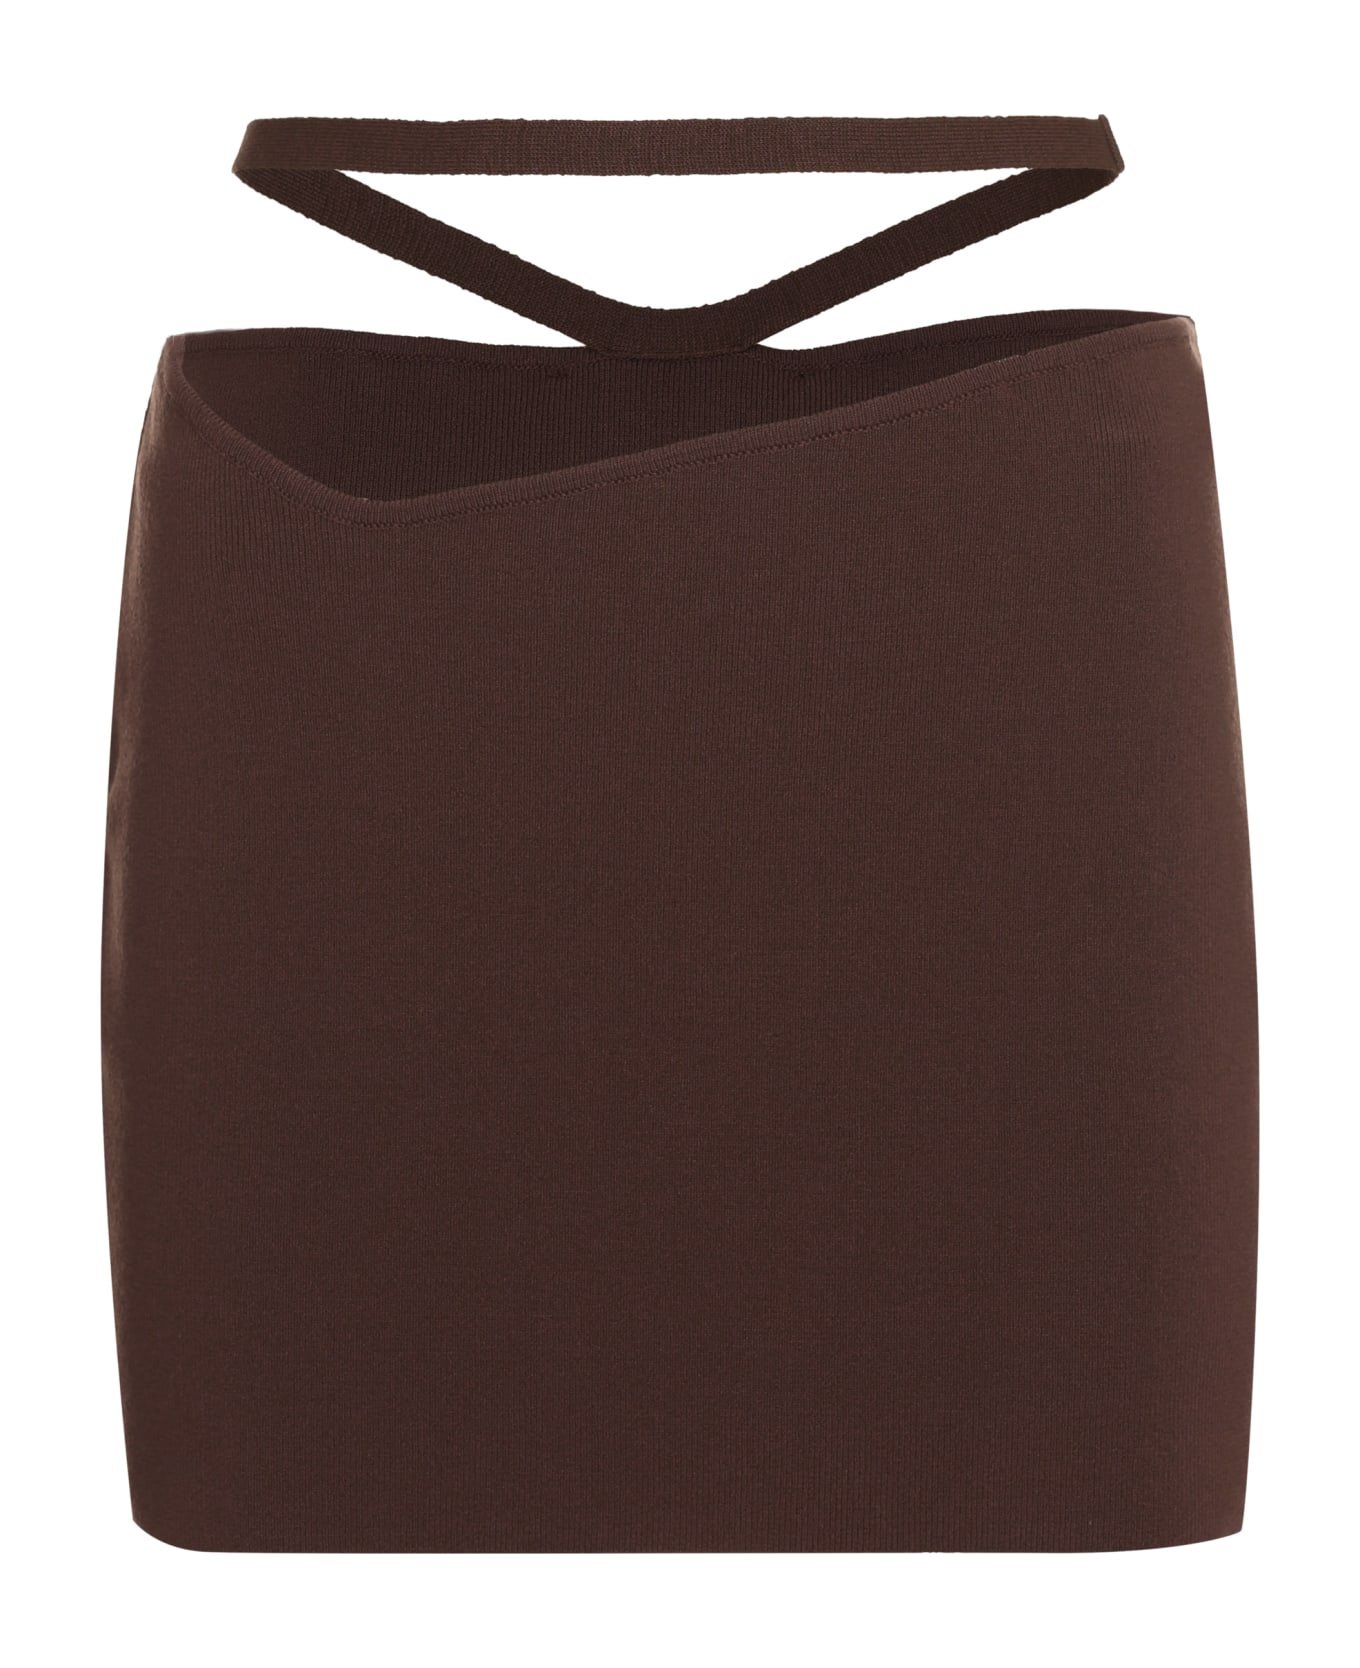 ANDREĀDAMO Knitted Mini Skirt - brown